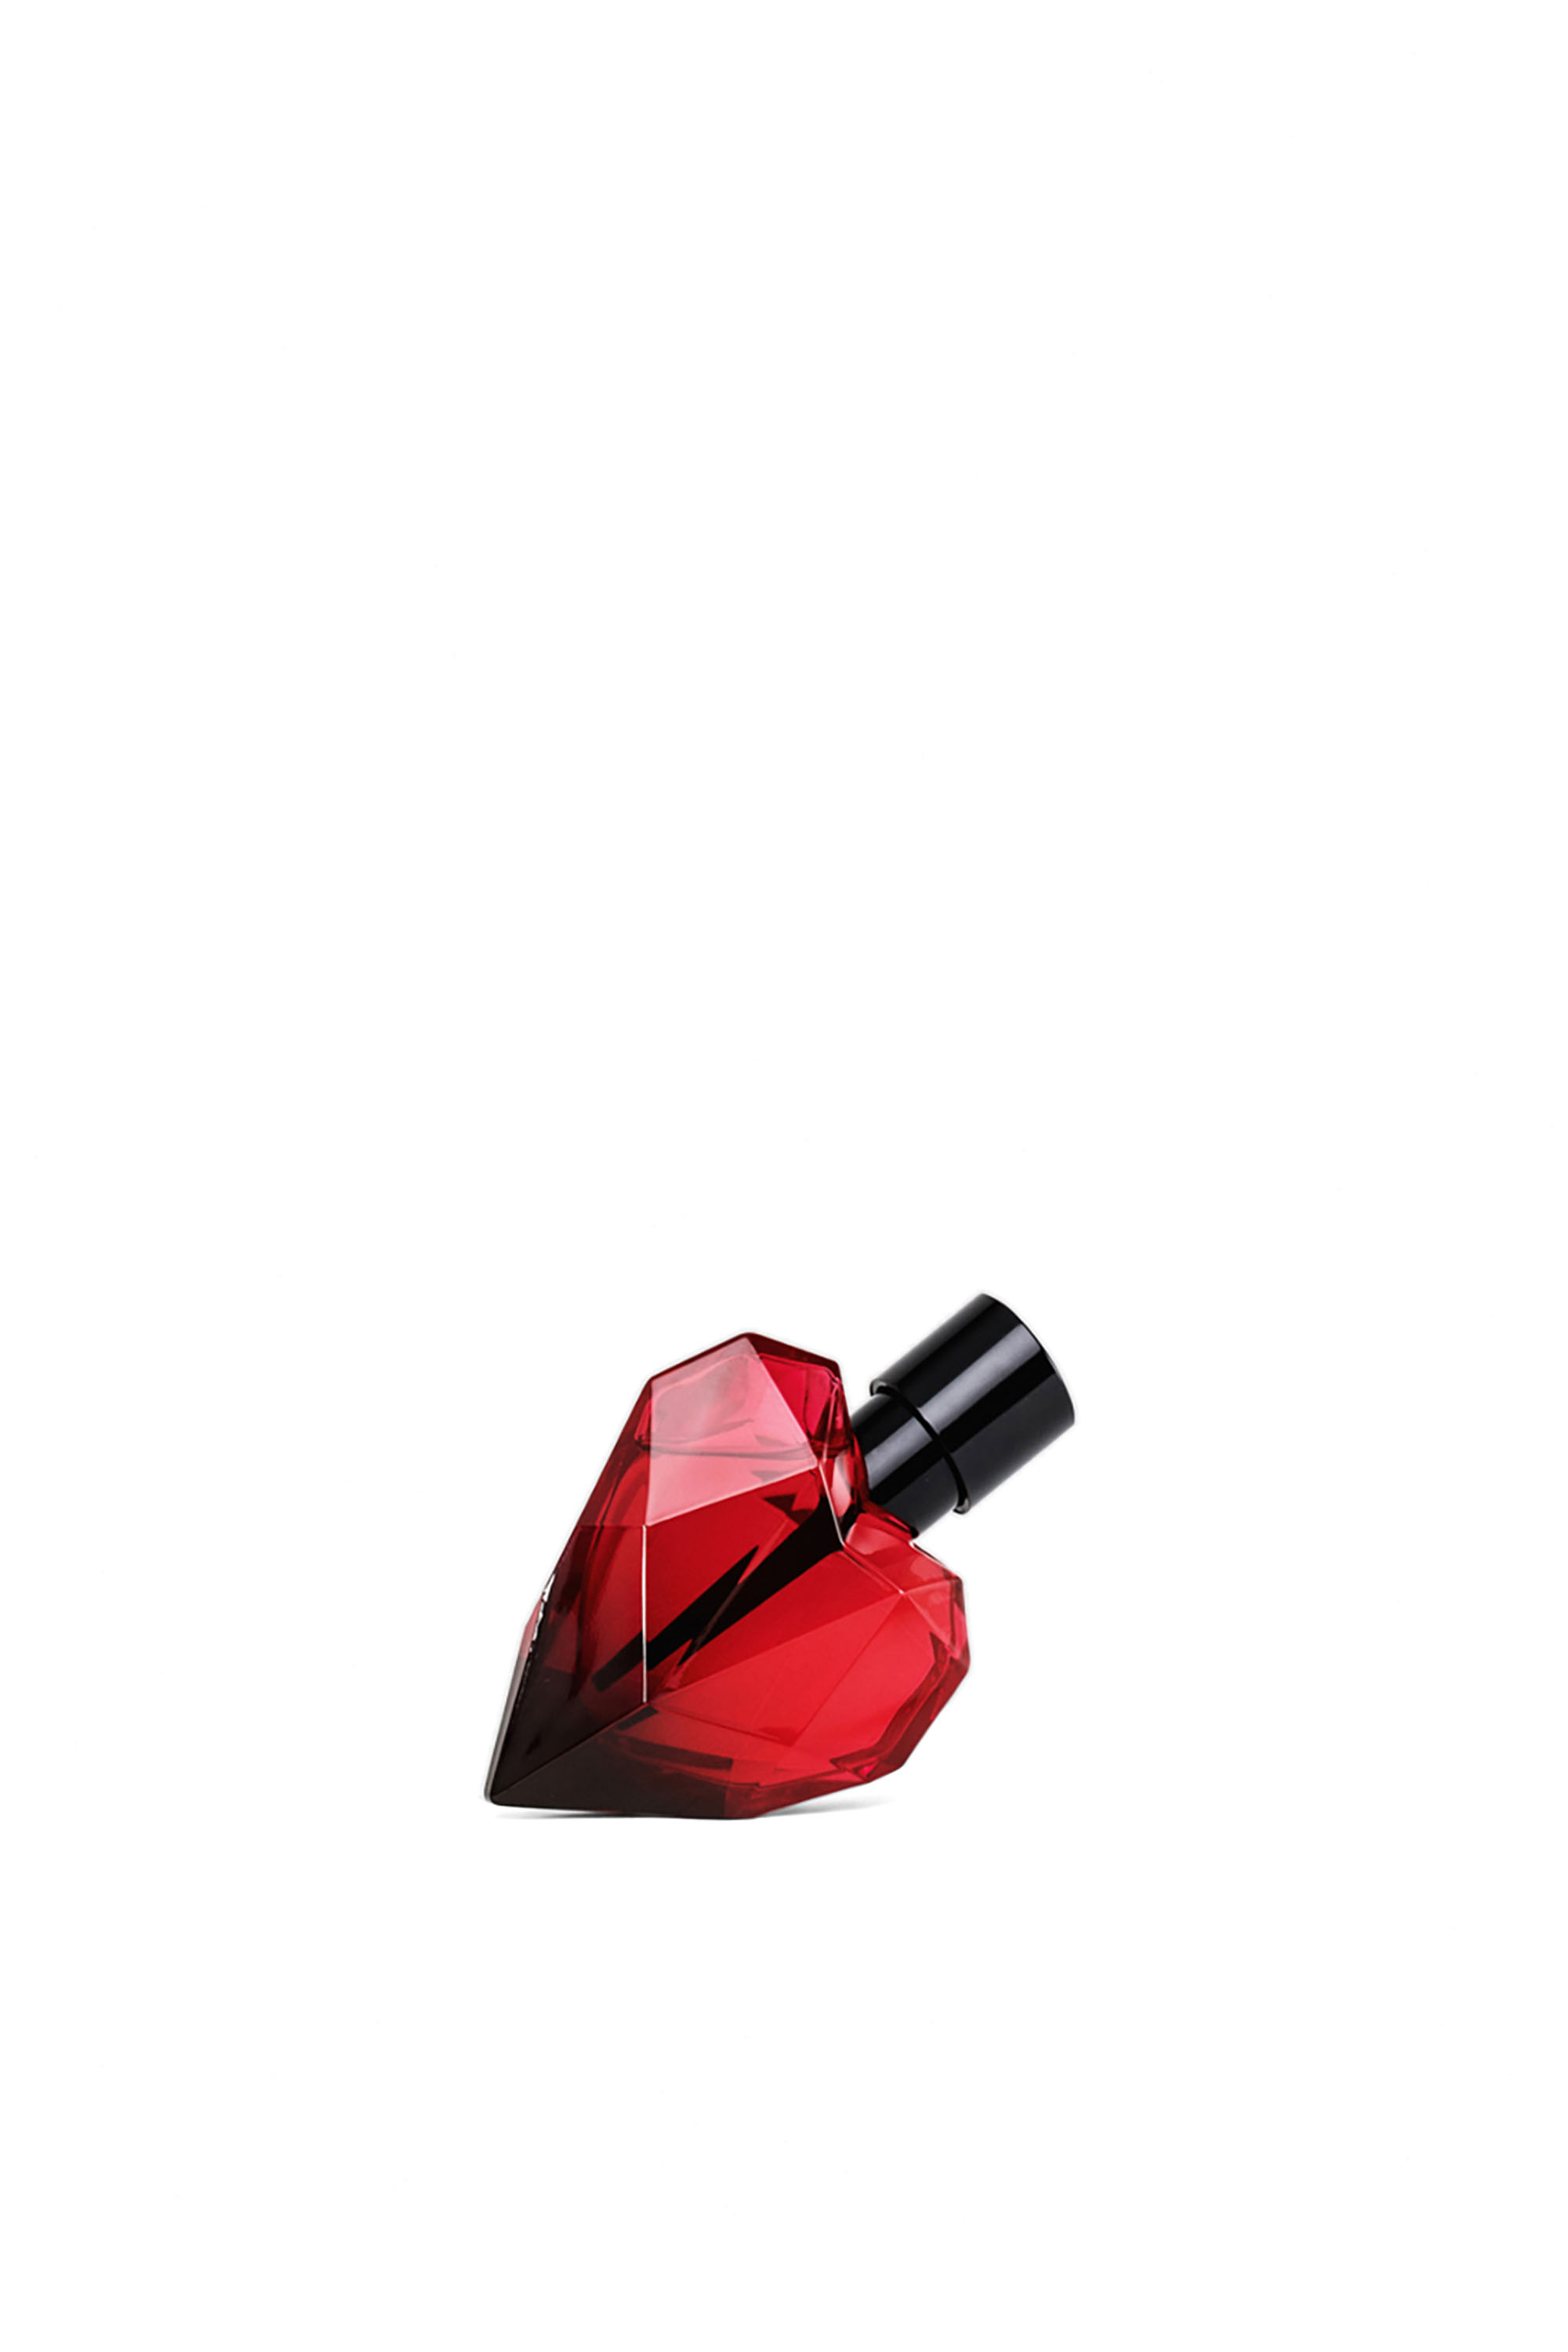 Diesel - LOVERDOSE RED KISS EAU DE PARFUM 30ML, Rojo - Image 1